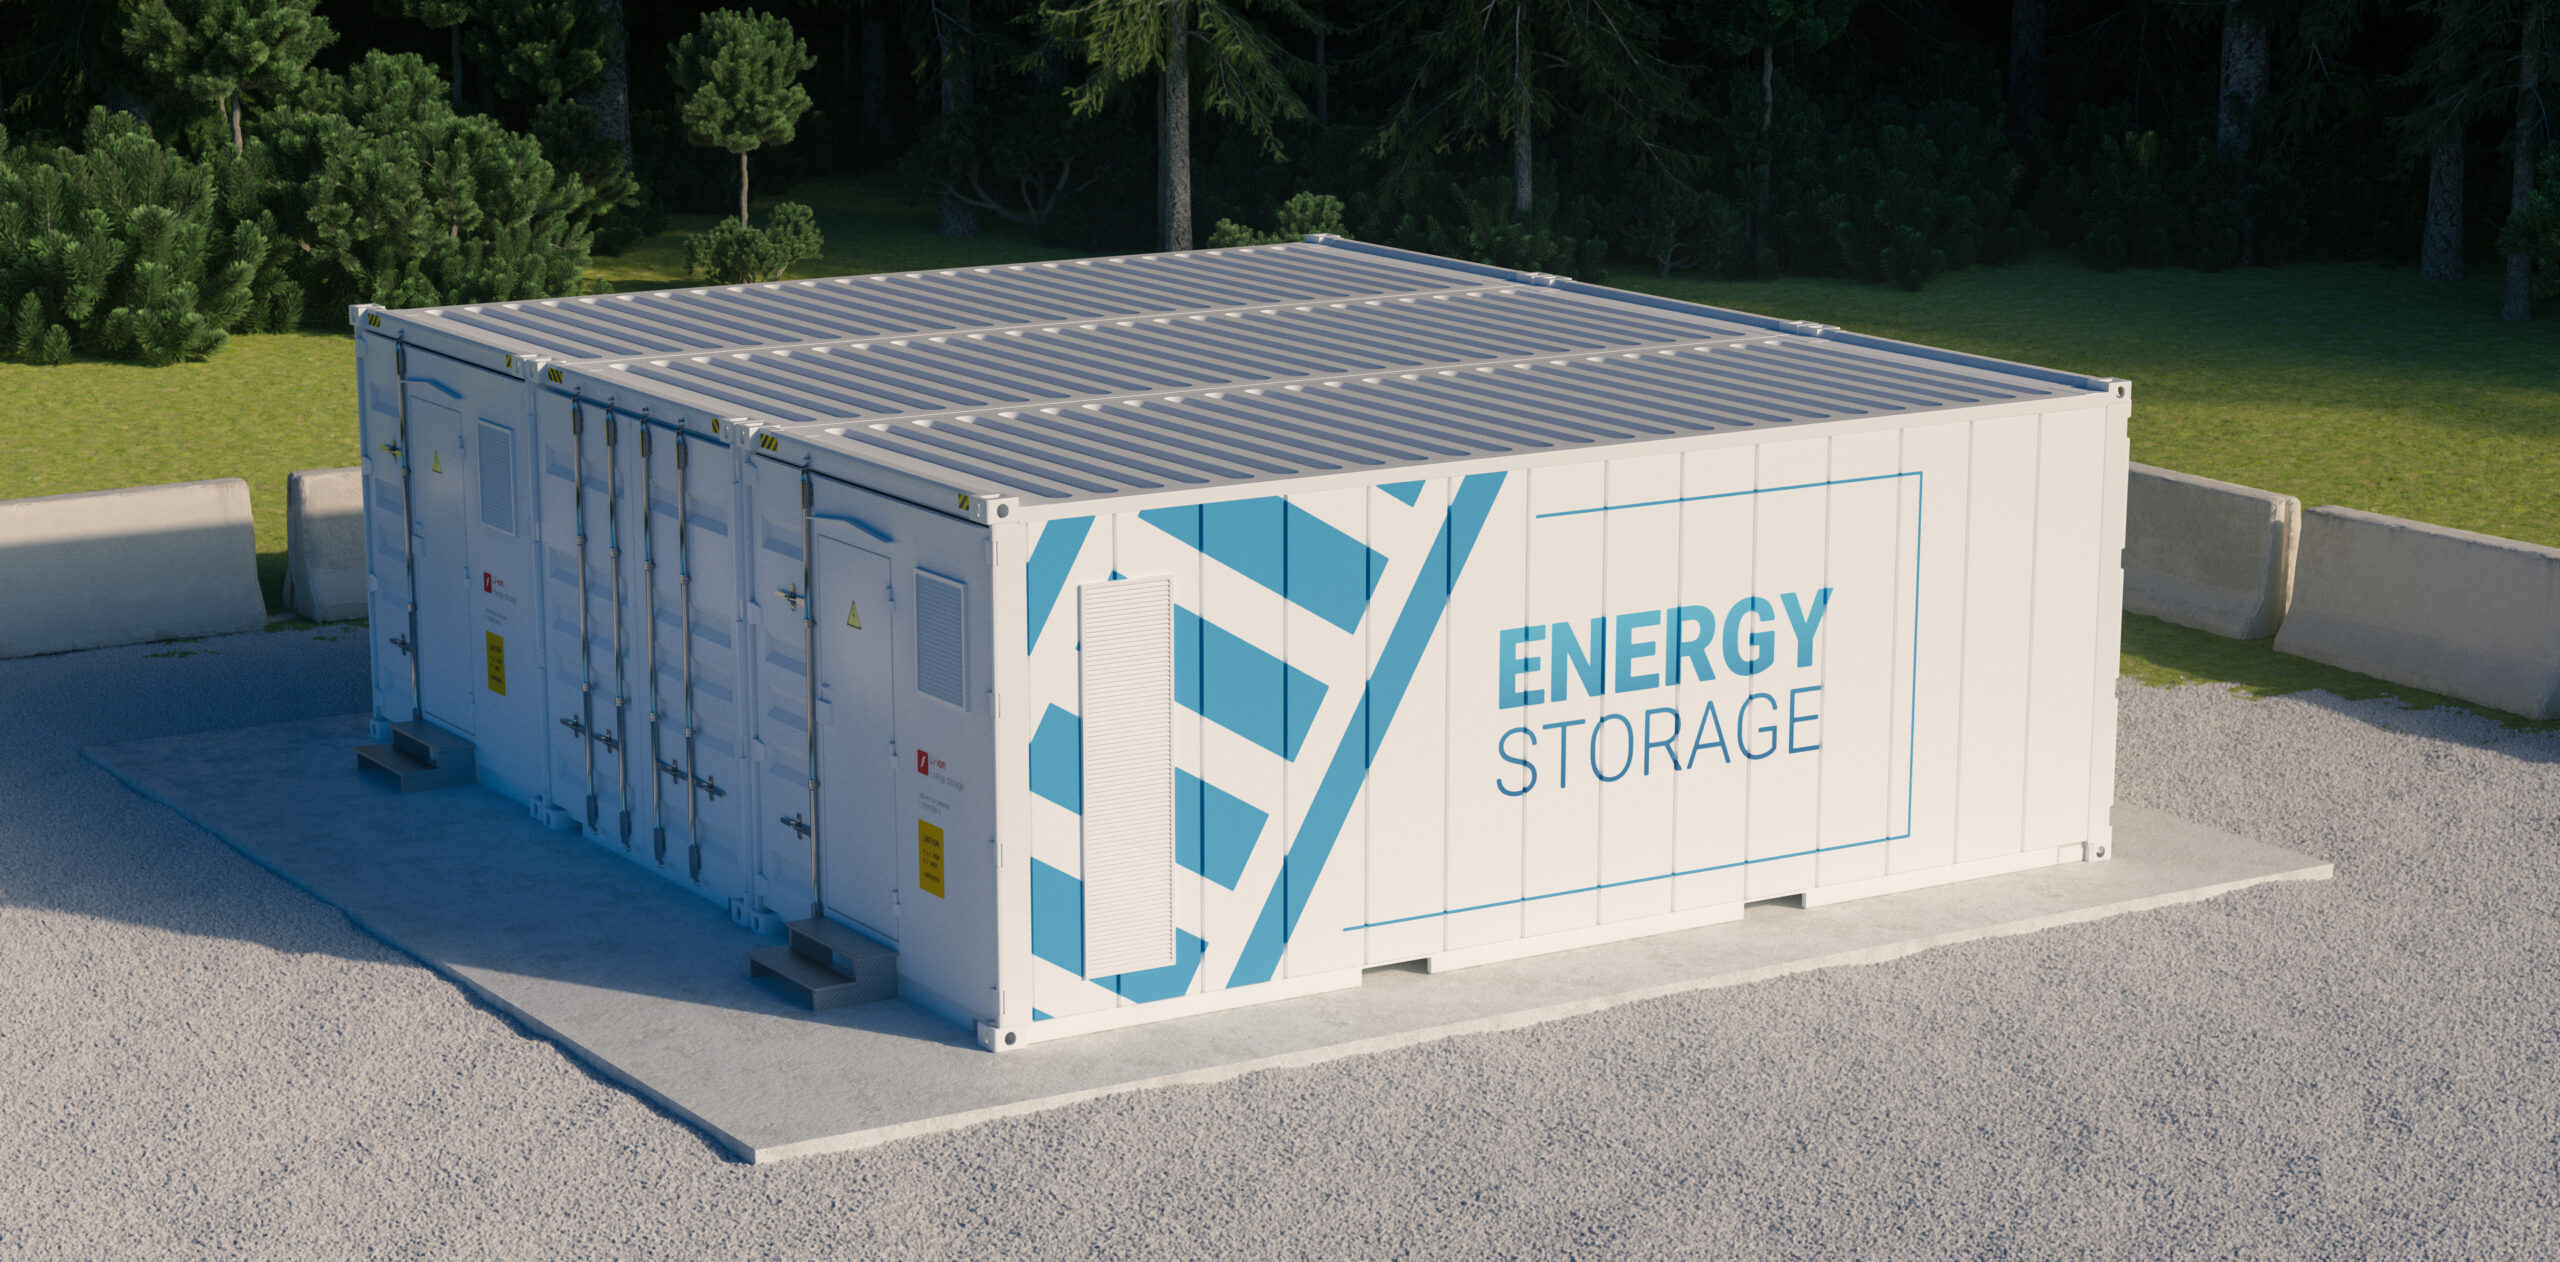 U.S. Leads the Way Globally in Energy Storage Development